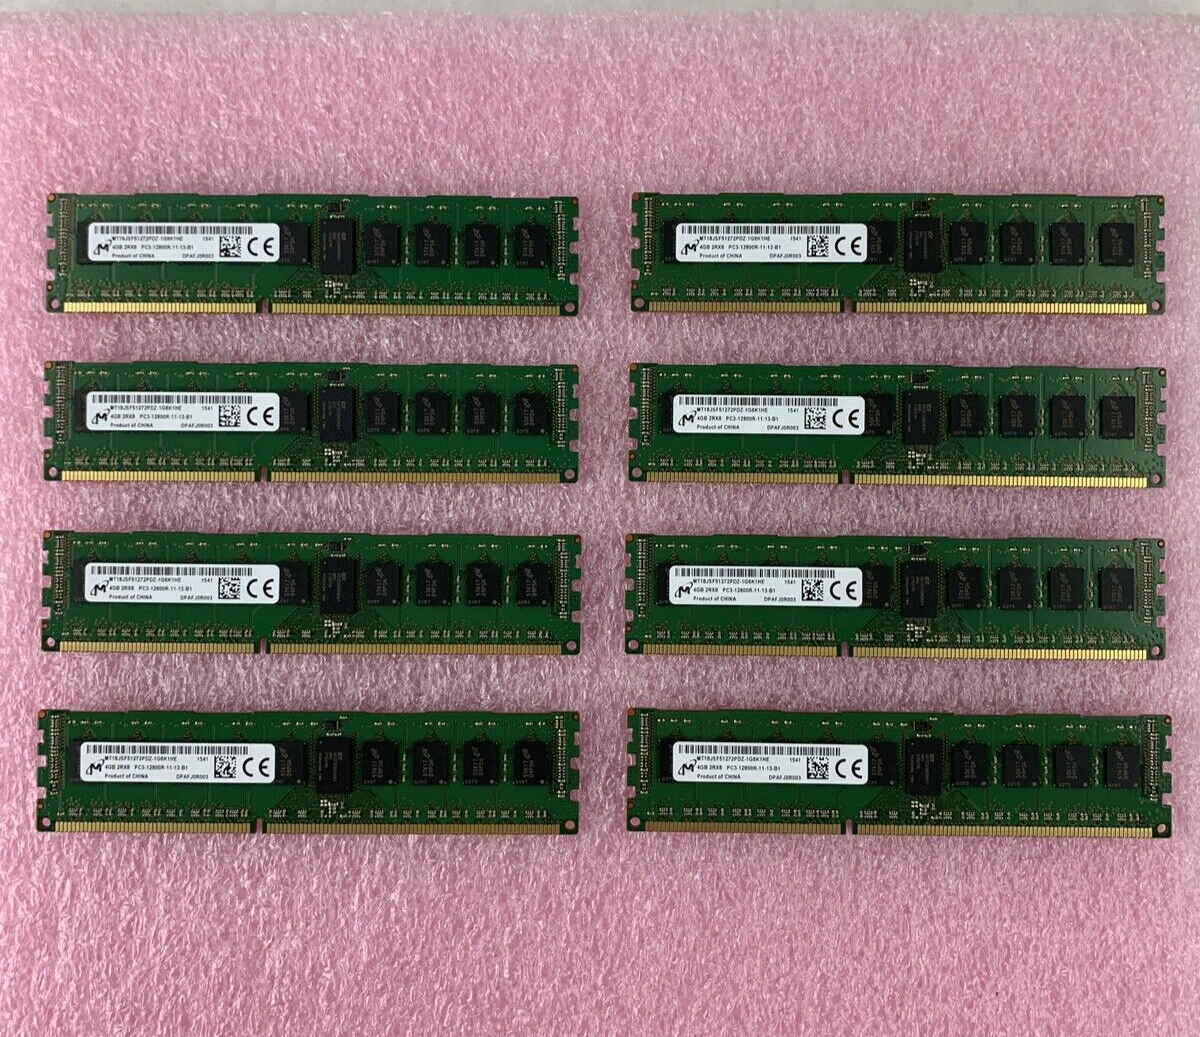 Lot of 8 Micron 4GB PC3-12800R DDR3 ECC SERVER RAM MT18JSF51272PDZ-1G6K1HE